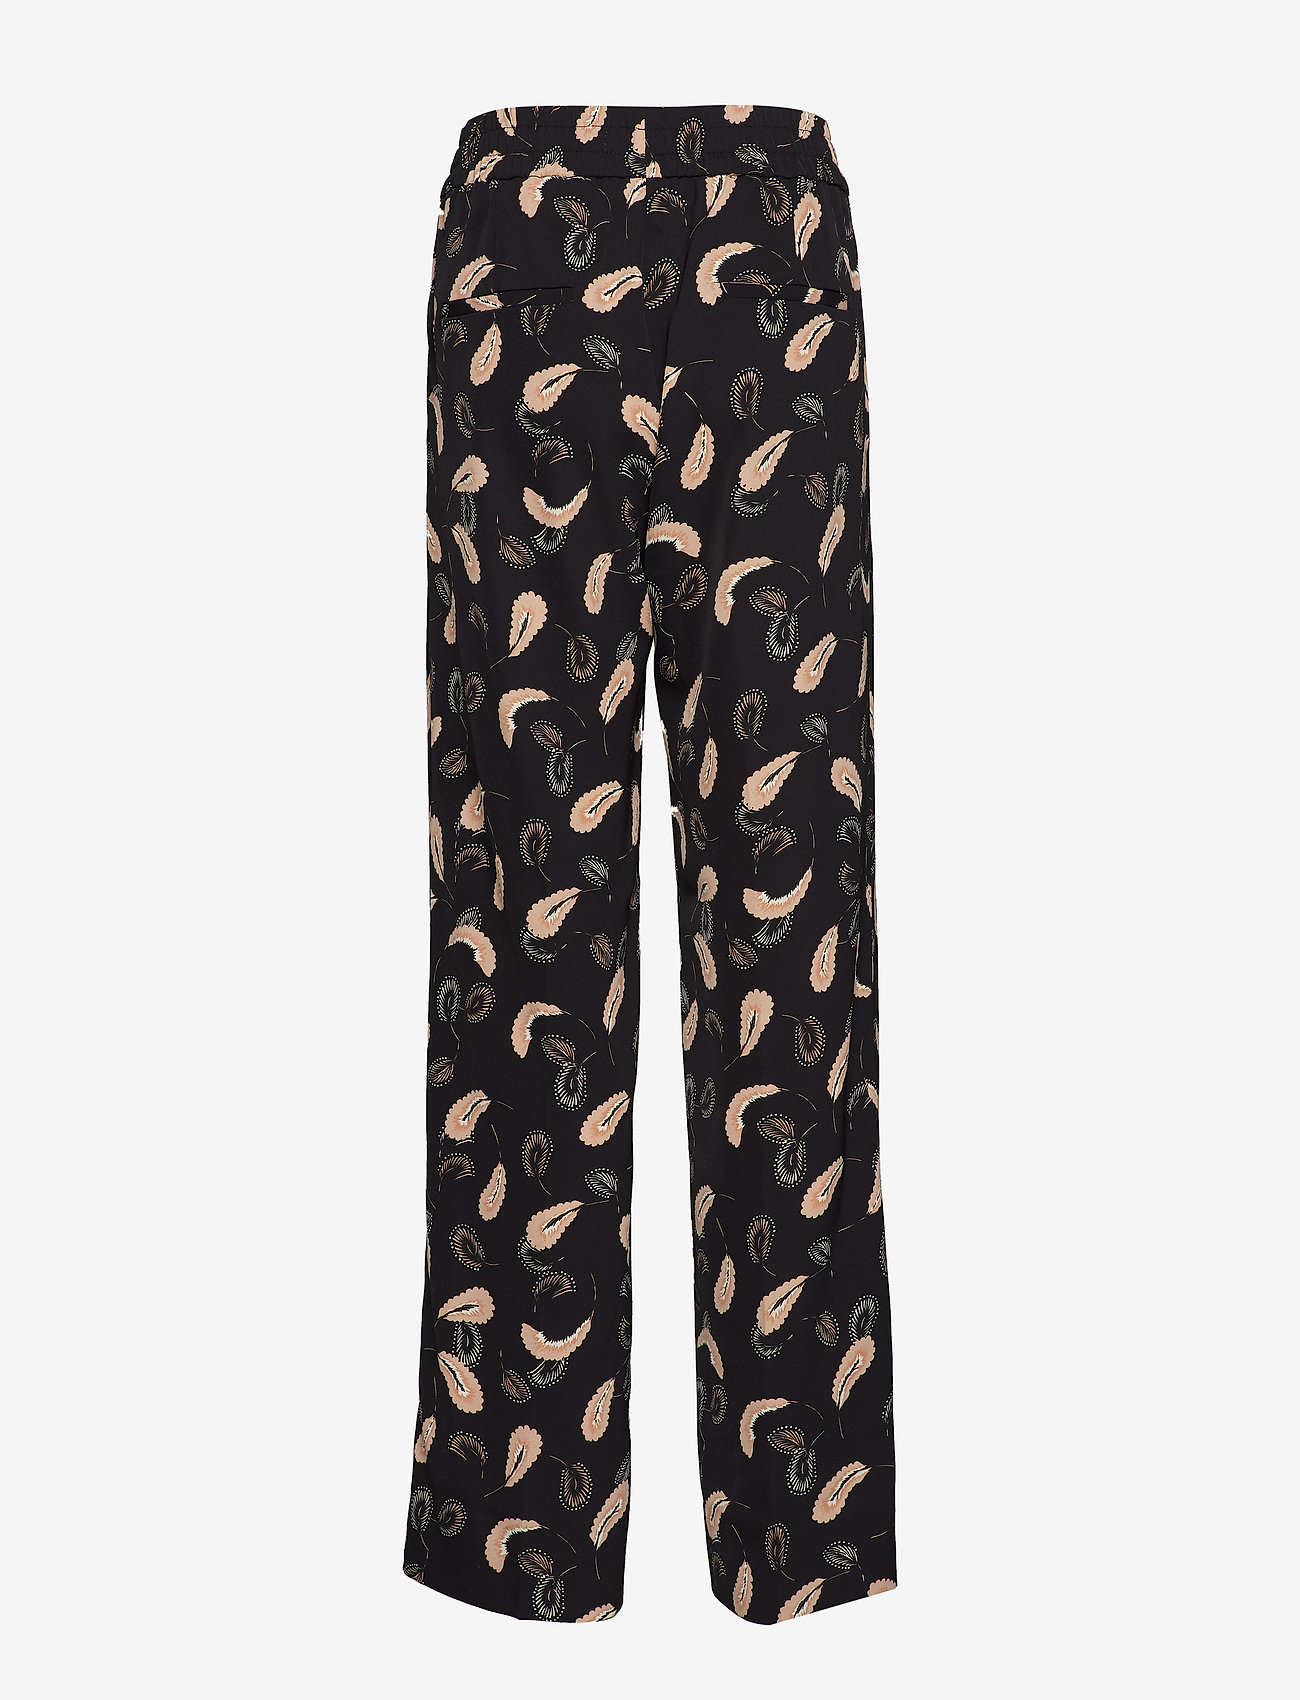 InWear - Acadia Pant - wide leg trousers - black abstract paisley - 1